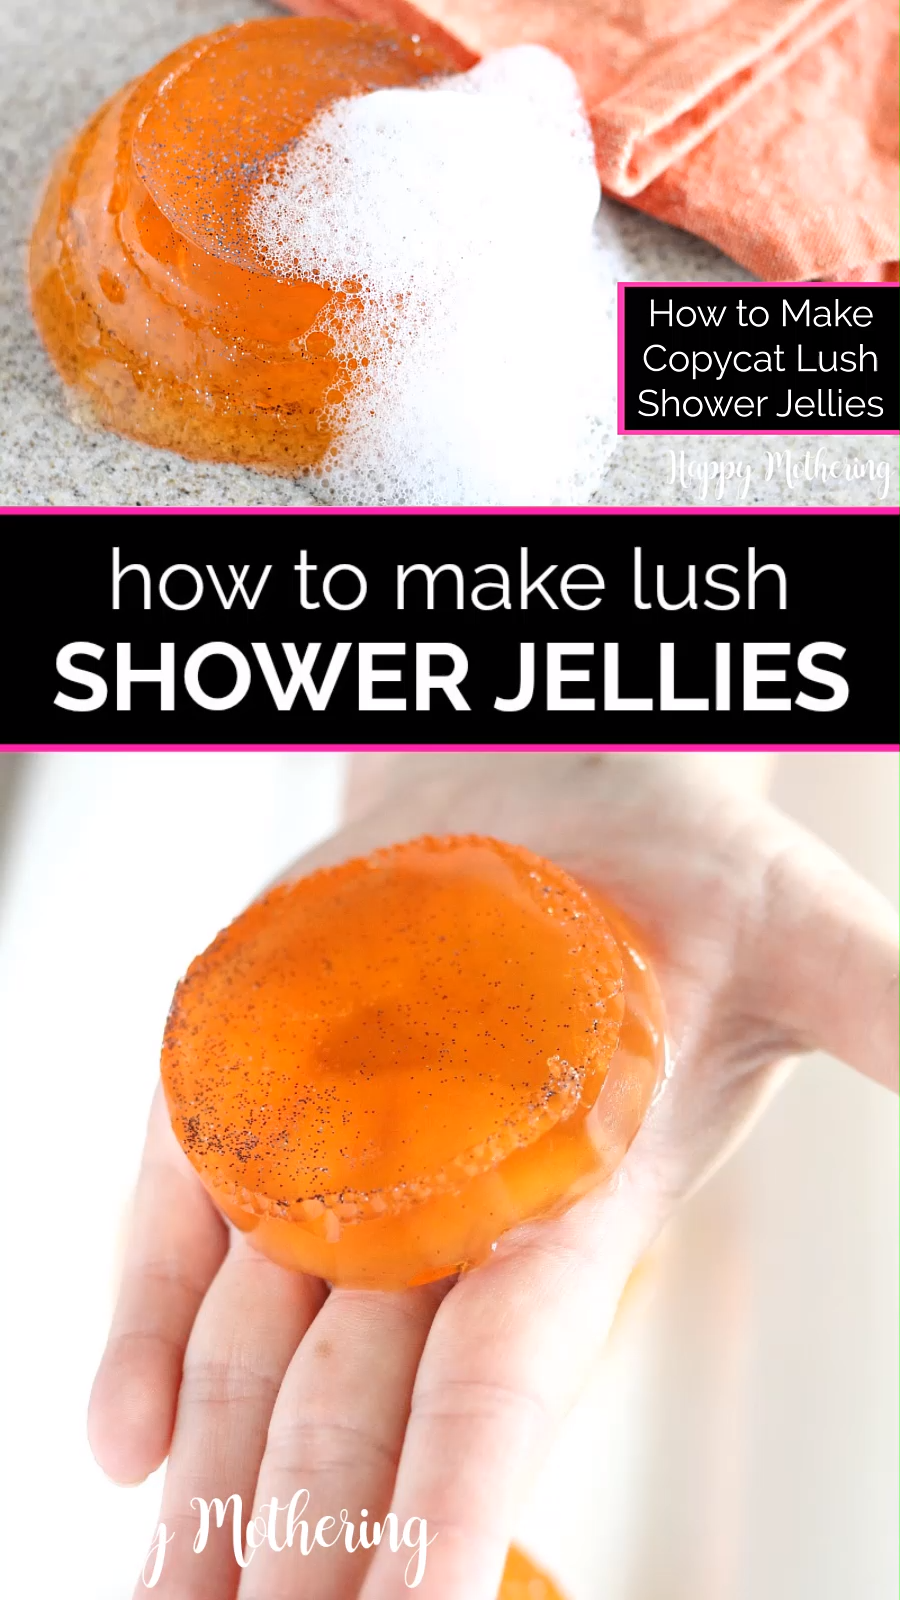 How to Make Copycat Lush Shower Jellies Video Tutorial - How to Make Copycat Lush Shower Jellies Video Tutorial -   18 homemade beauty Tips ideas